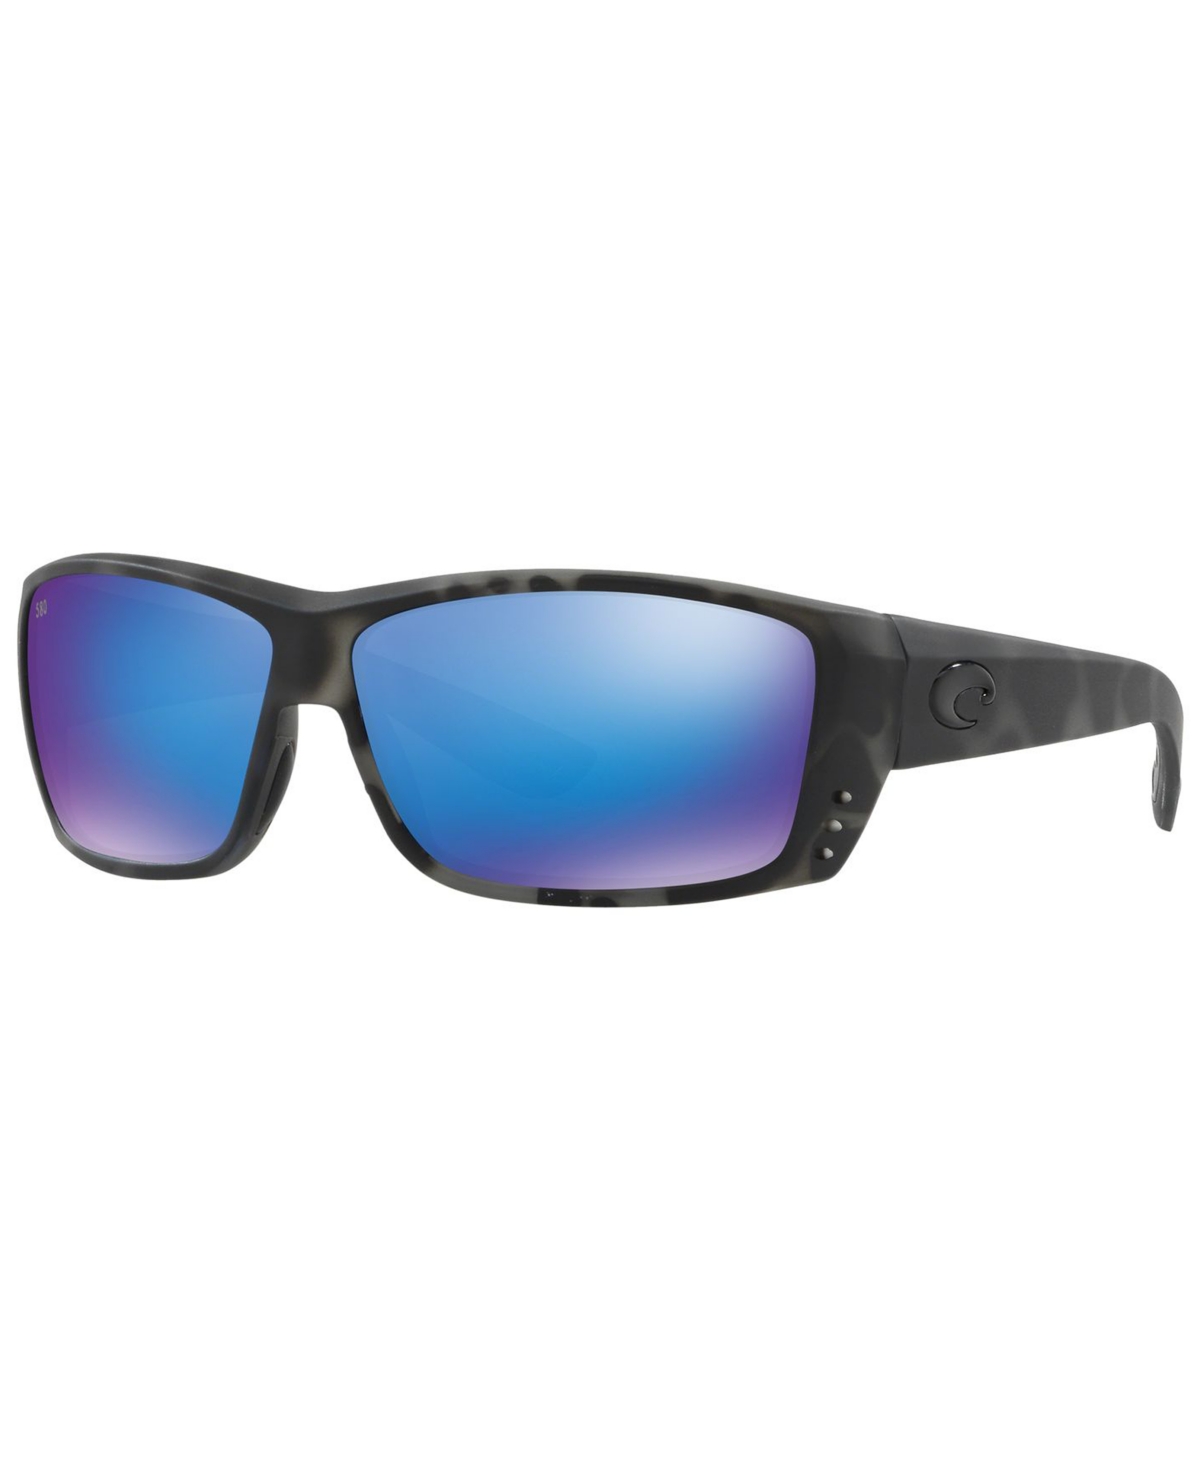 Polarized Sunglasses, Cat Cay Polarized 61 - GREY TORTOISE/ BLUE MIRROR POLAR